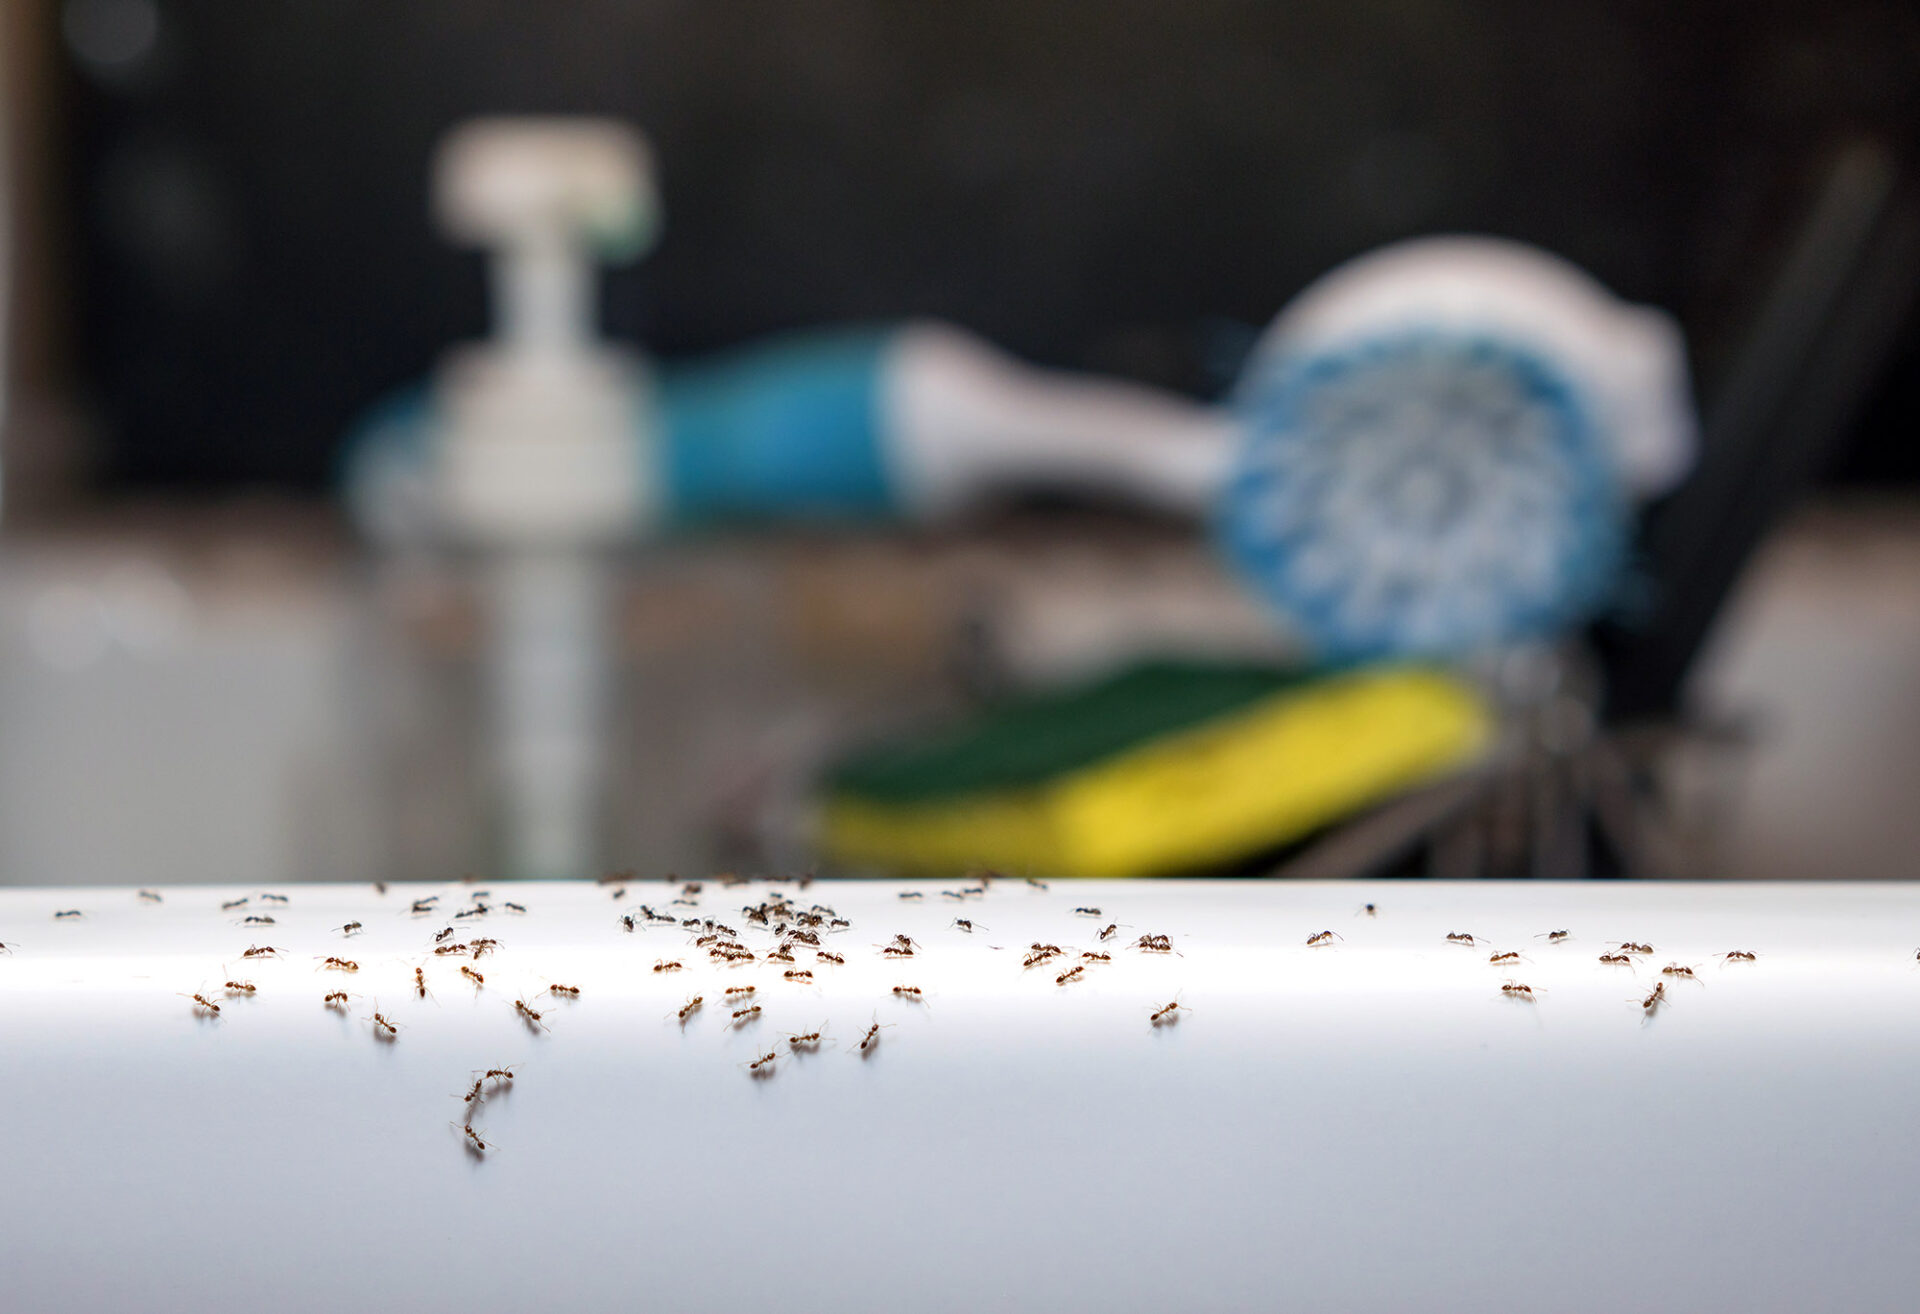 tiny ants form my bathroom sink